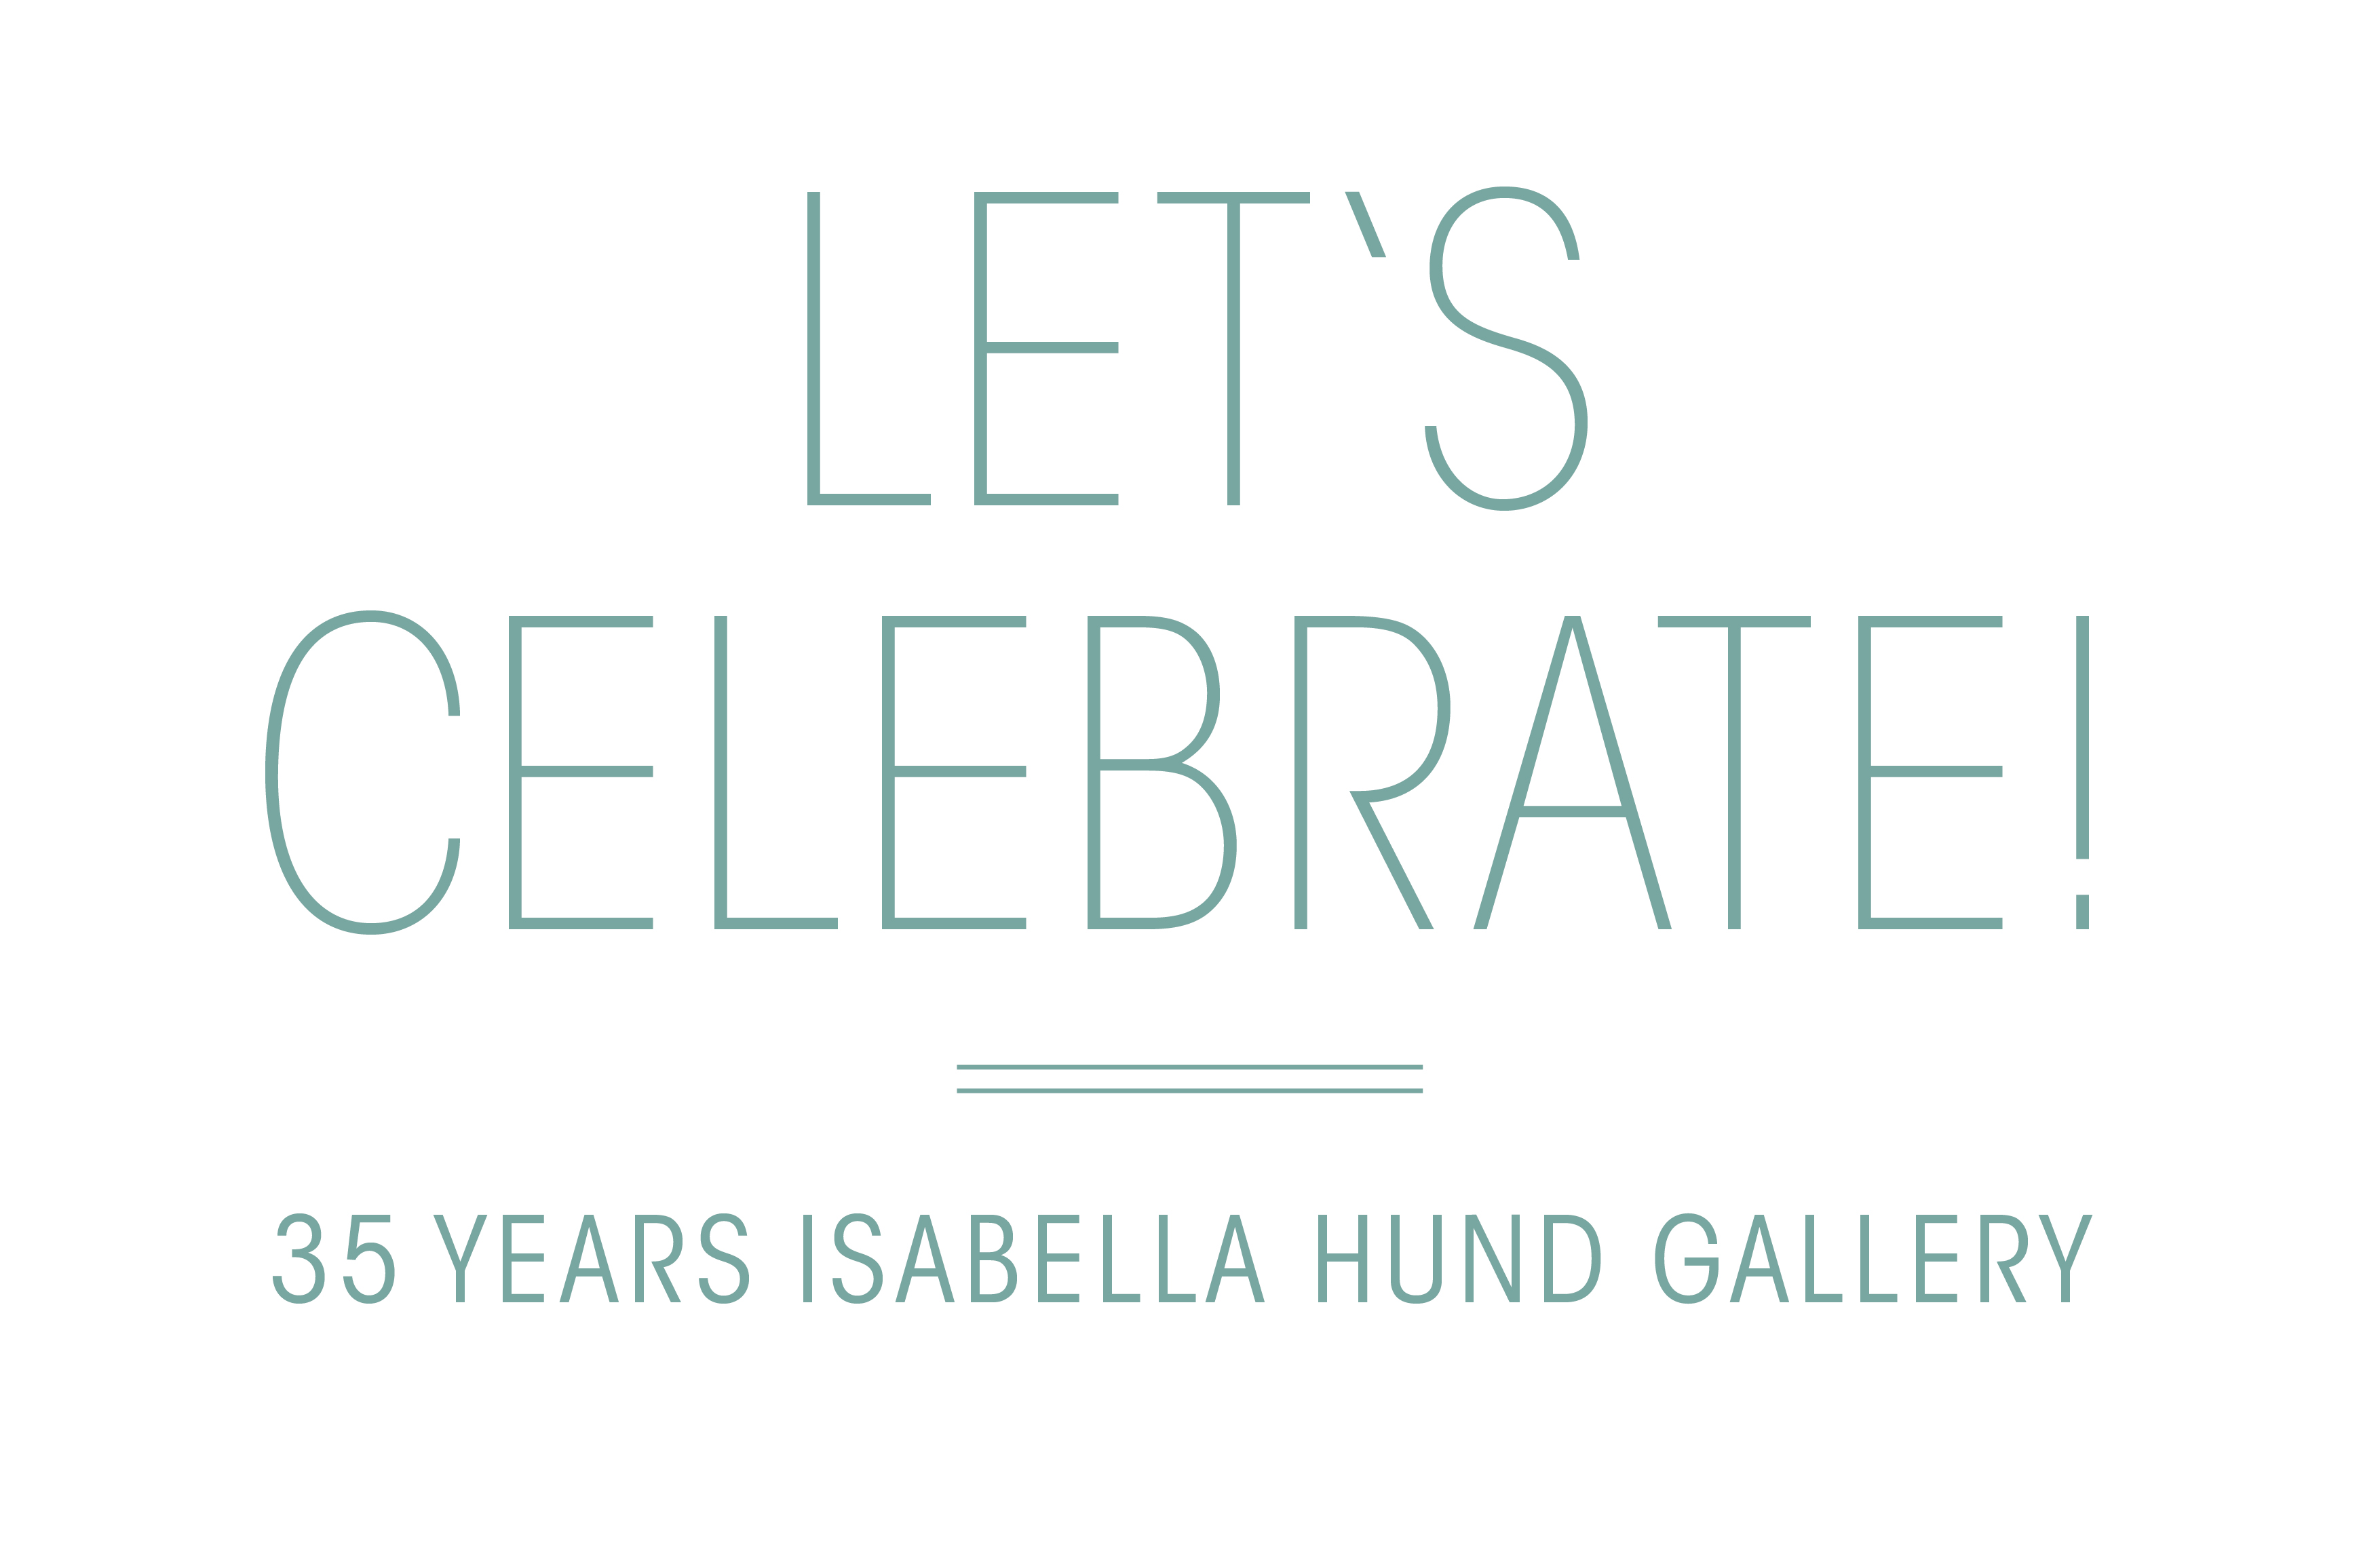 Isabella Hund Gallery celebrate 35 years